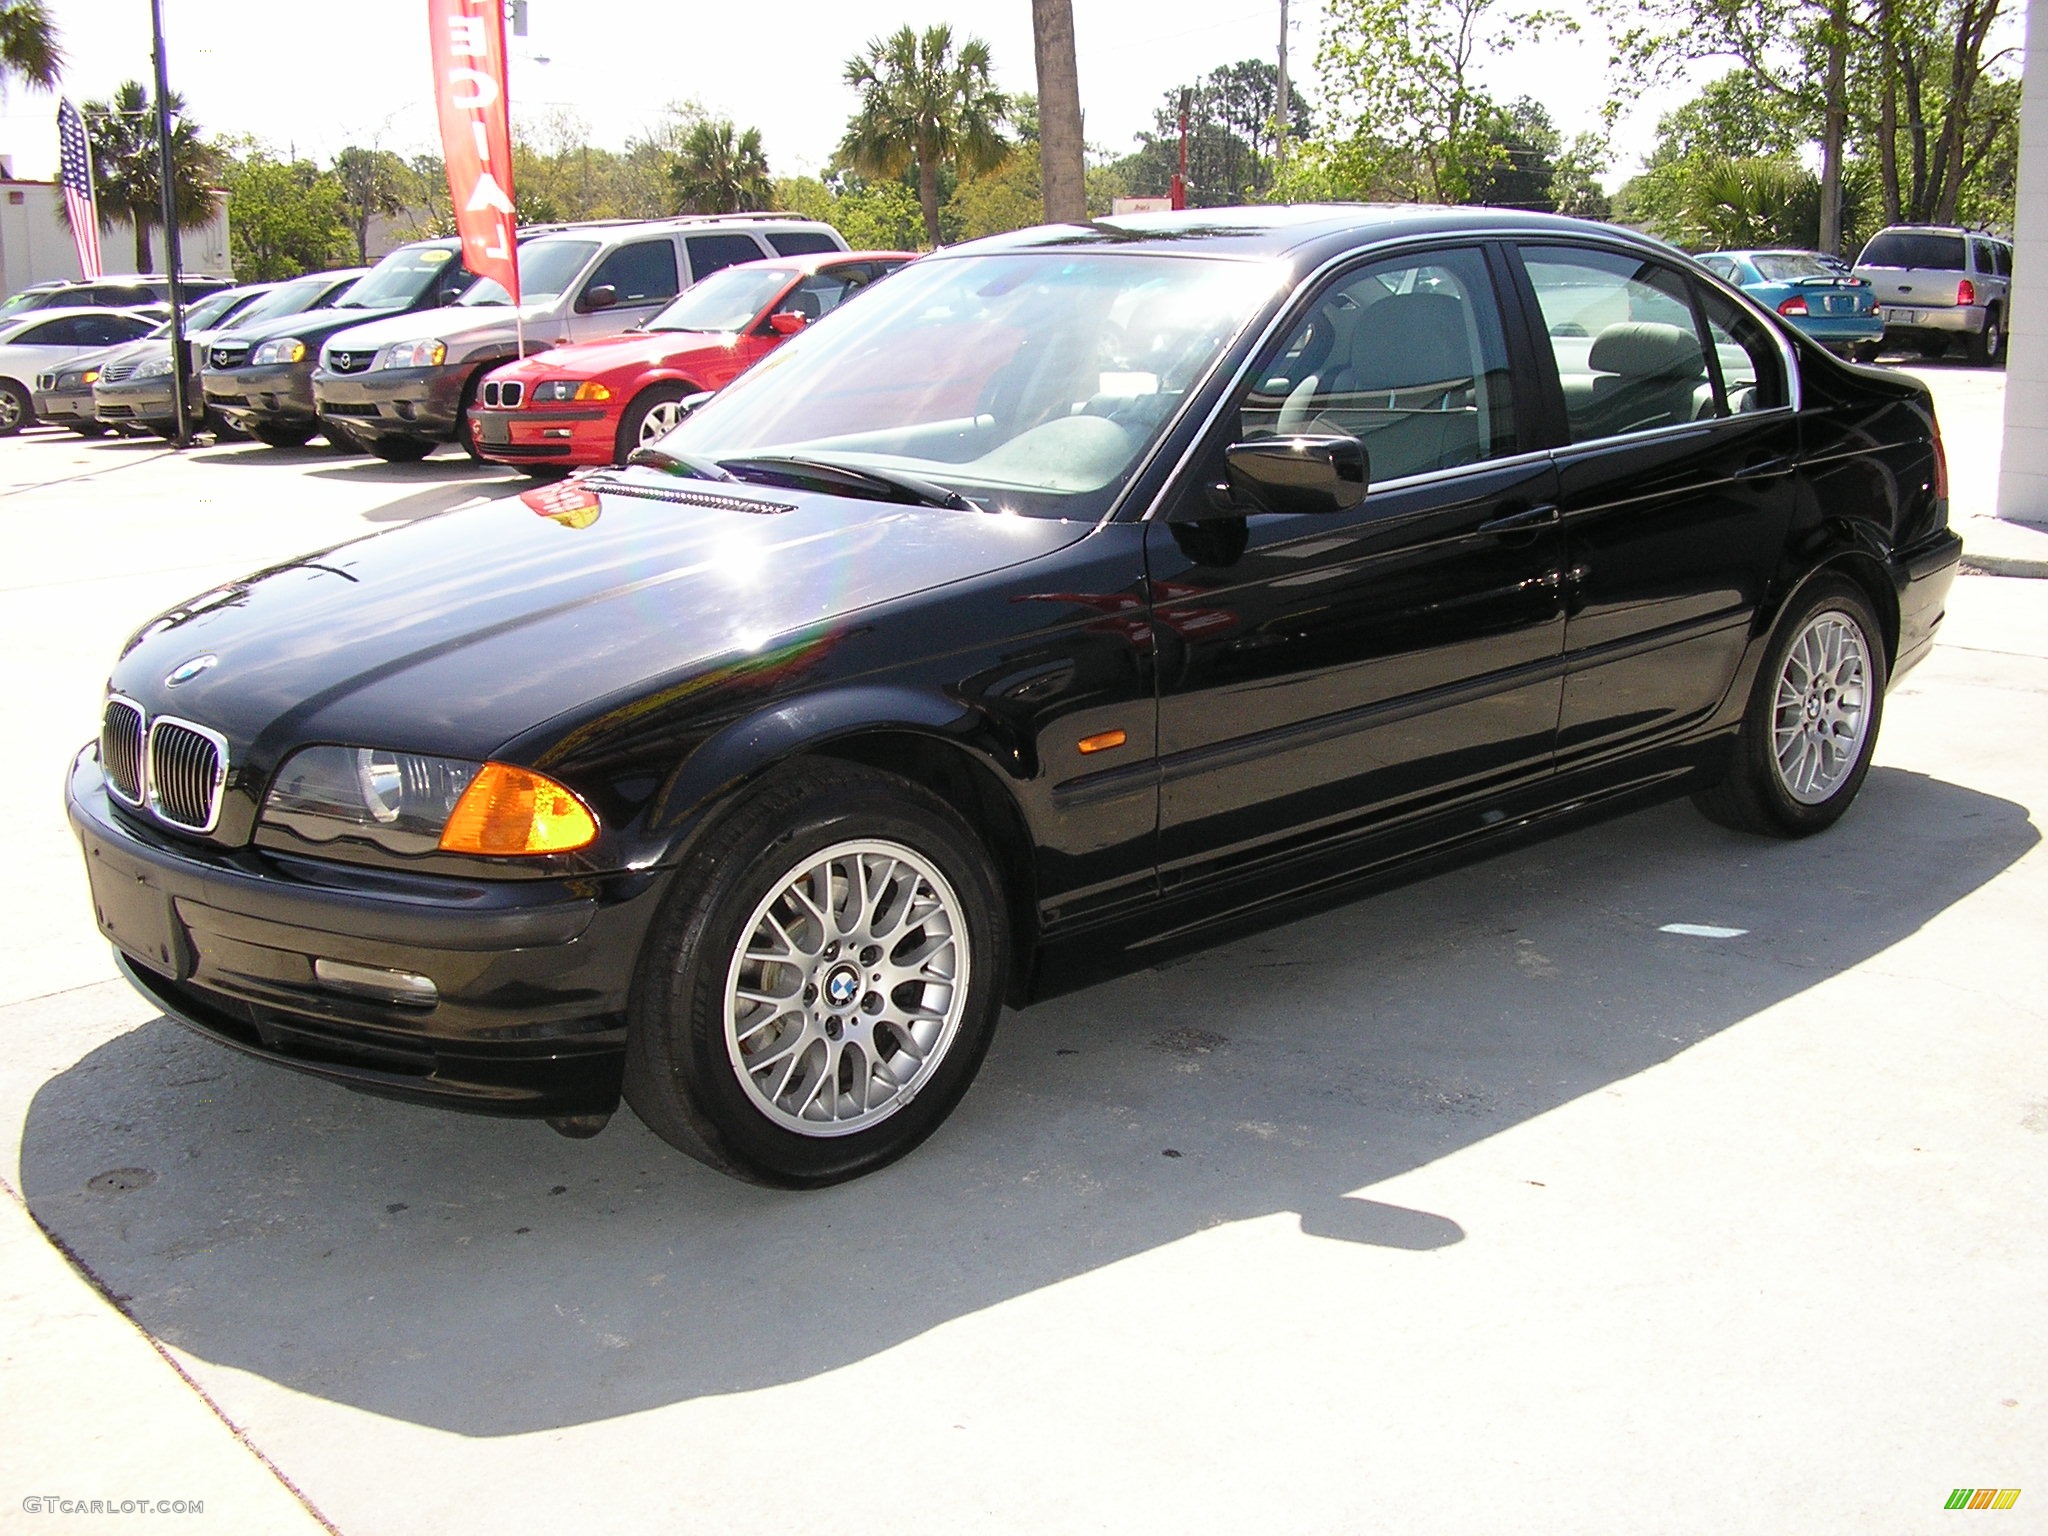 Jet Black BMW 3 Series